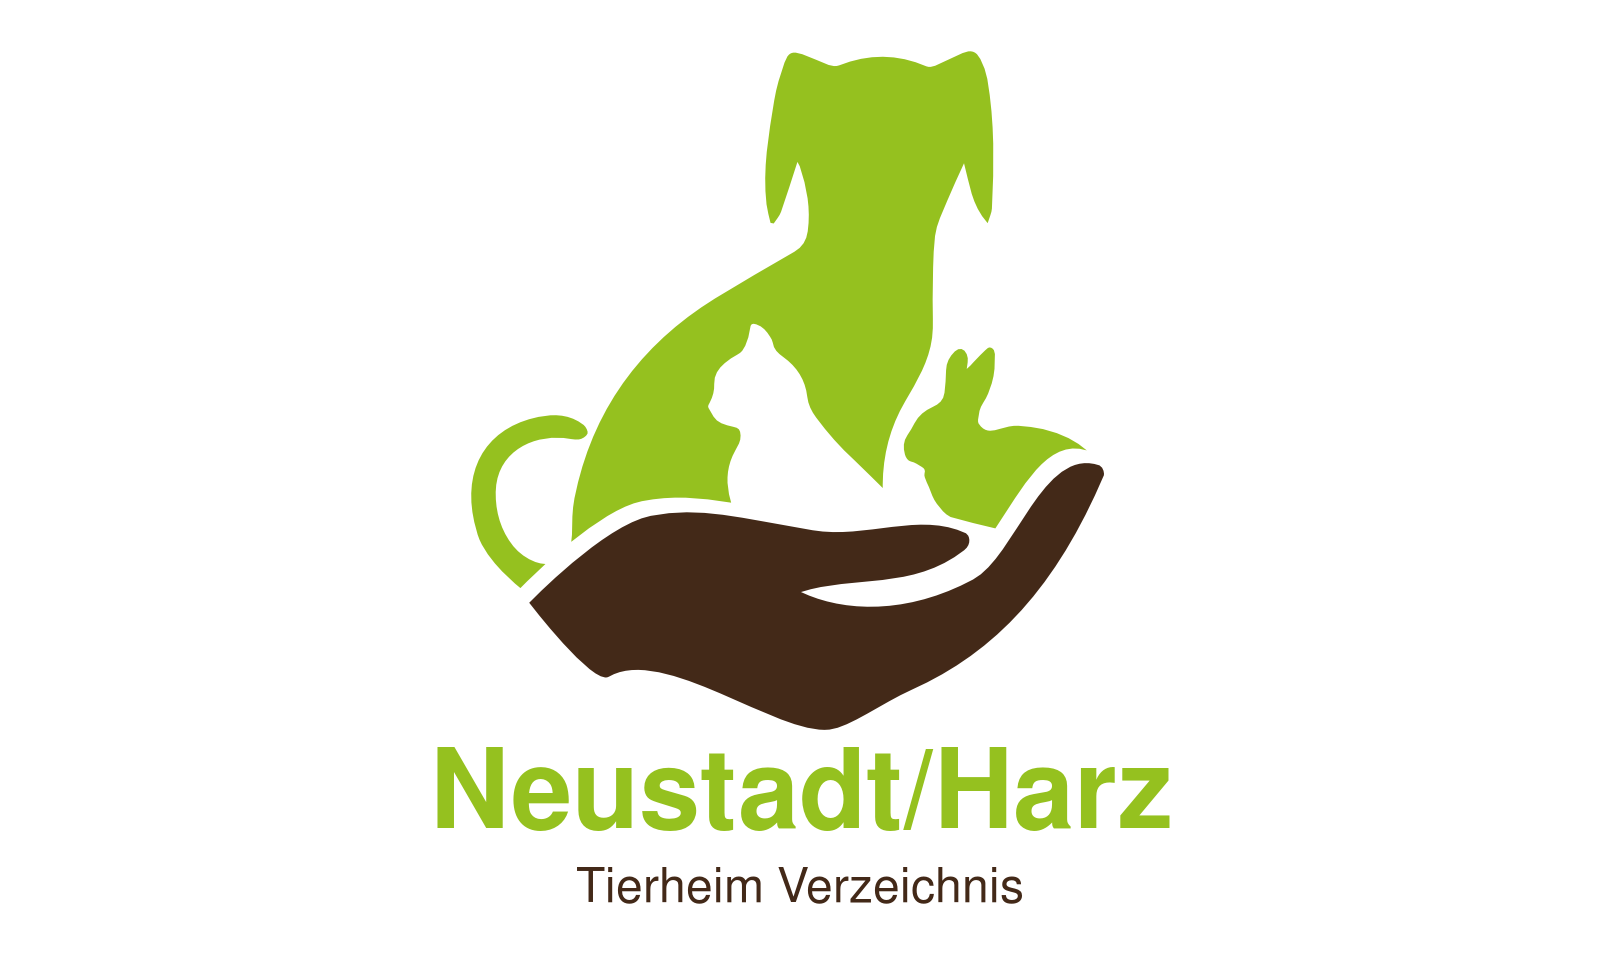 Tierheim Neustadt/Harz